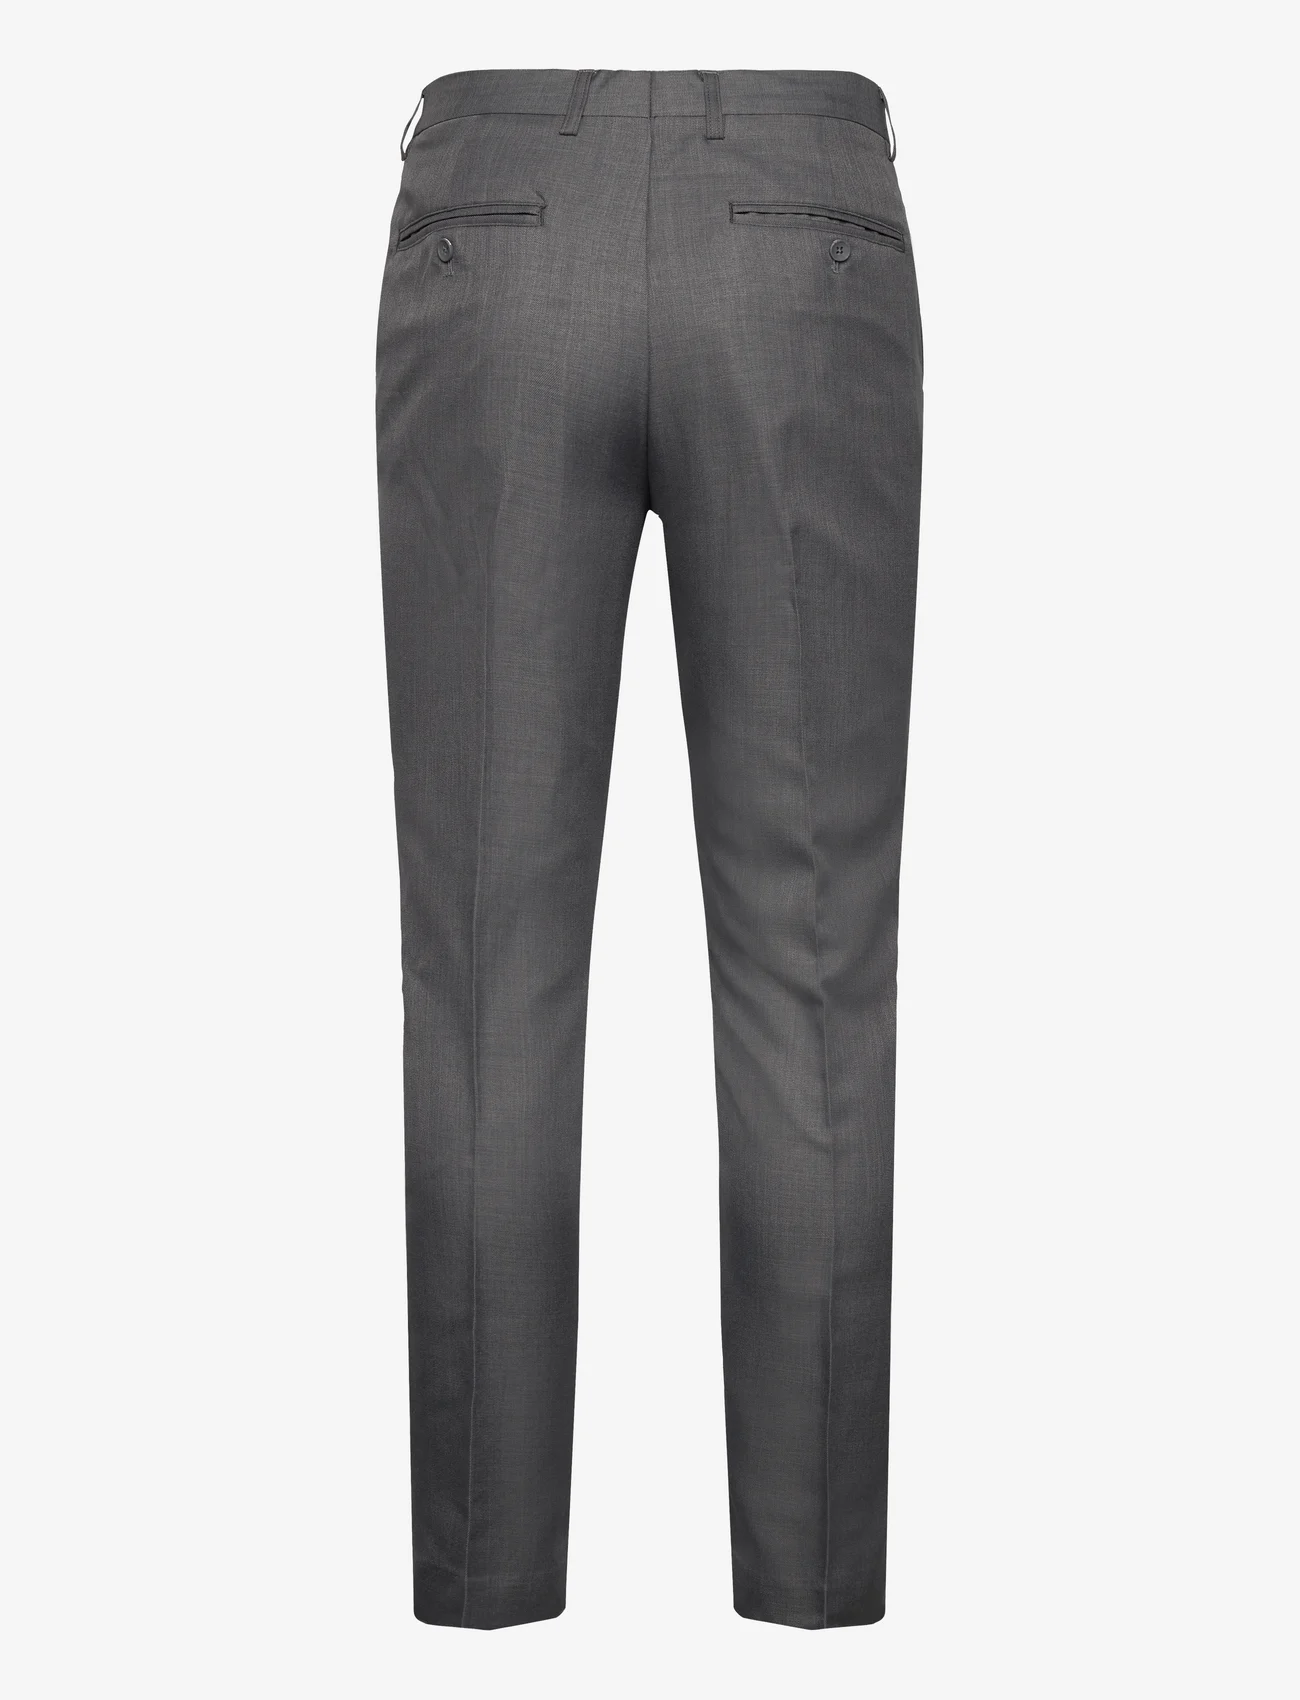 ONLY & SONS - ONSEVE SLIM CLEAN 0052 PANT - suit trousers - medium grey melange - 1